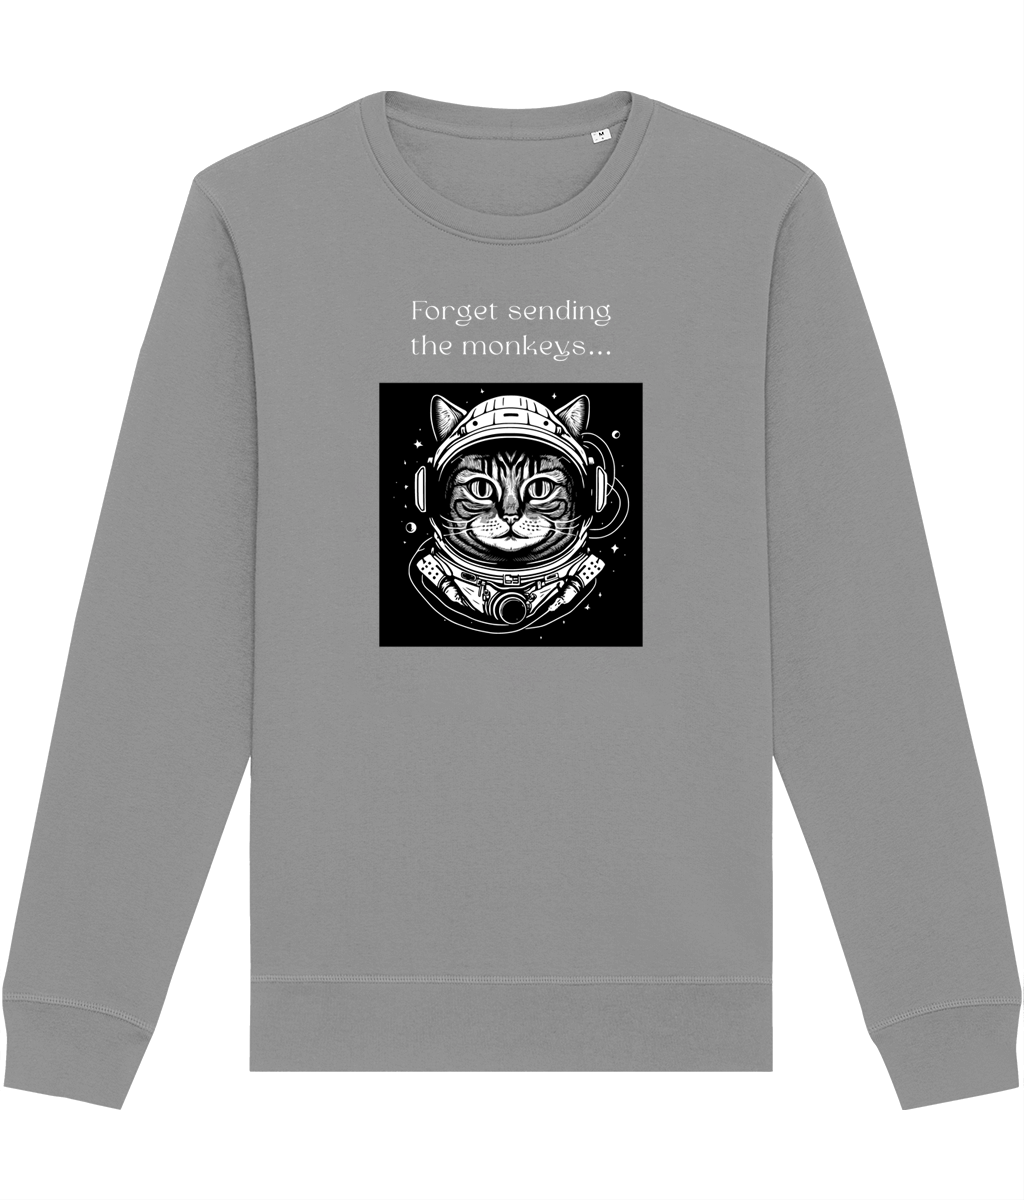 Organic Cotton 'Cat Astronaut' Funny Cat Sweatshirt - Cat Sweatshirt